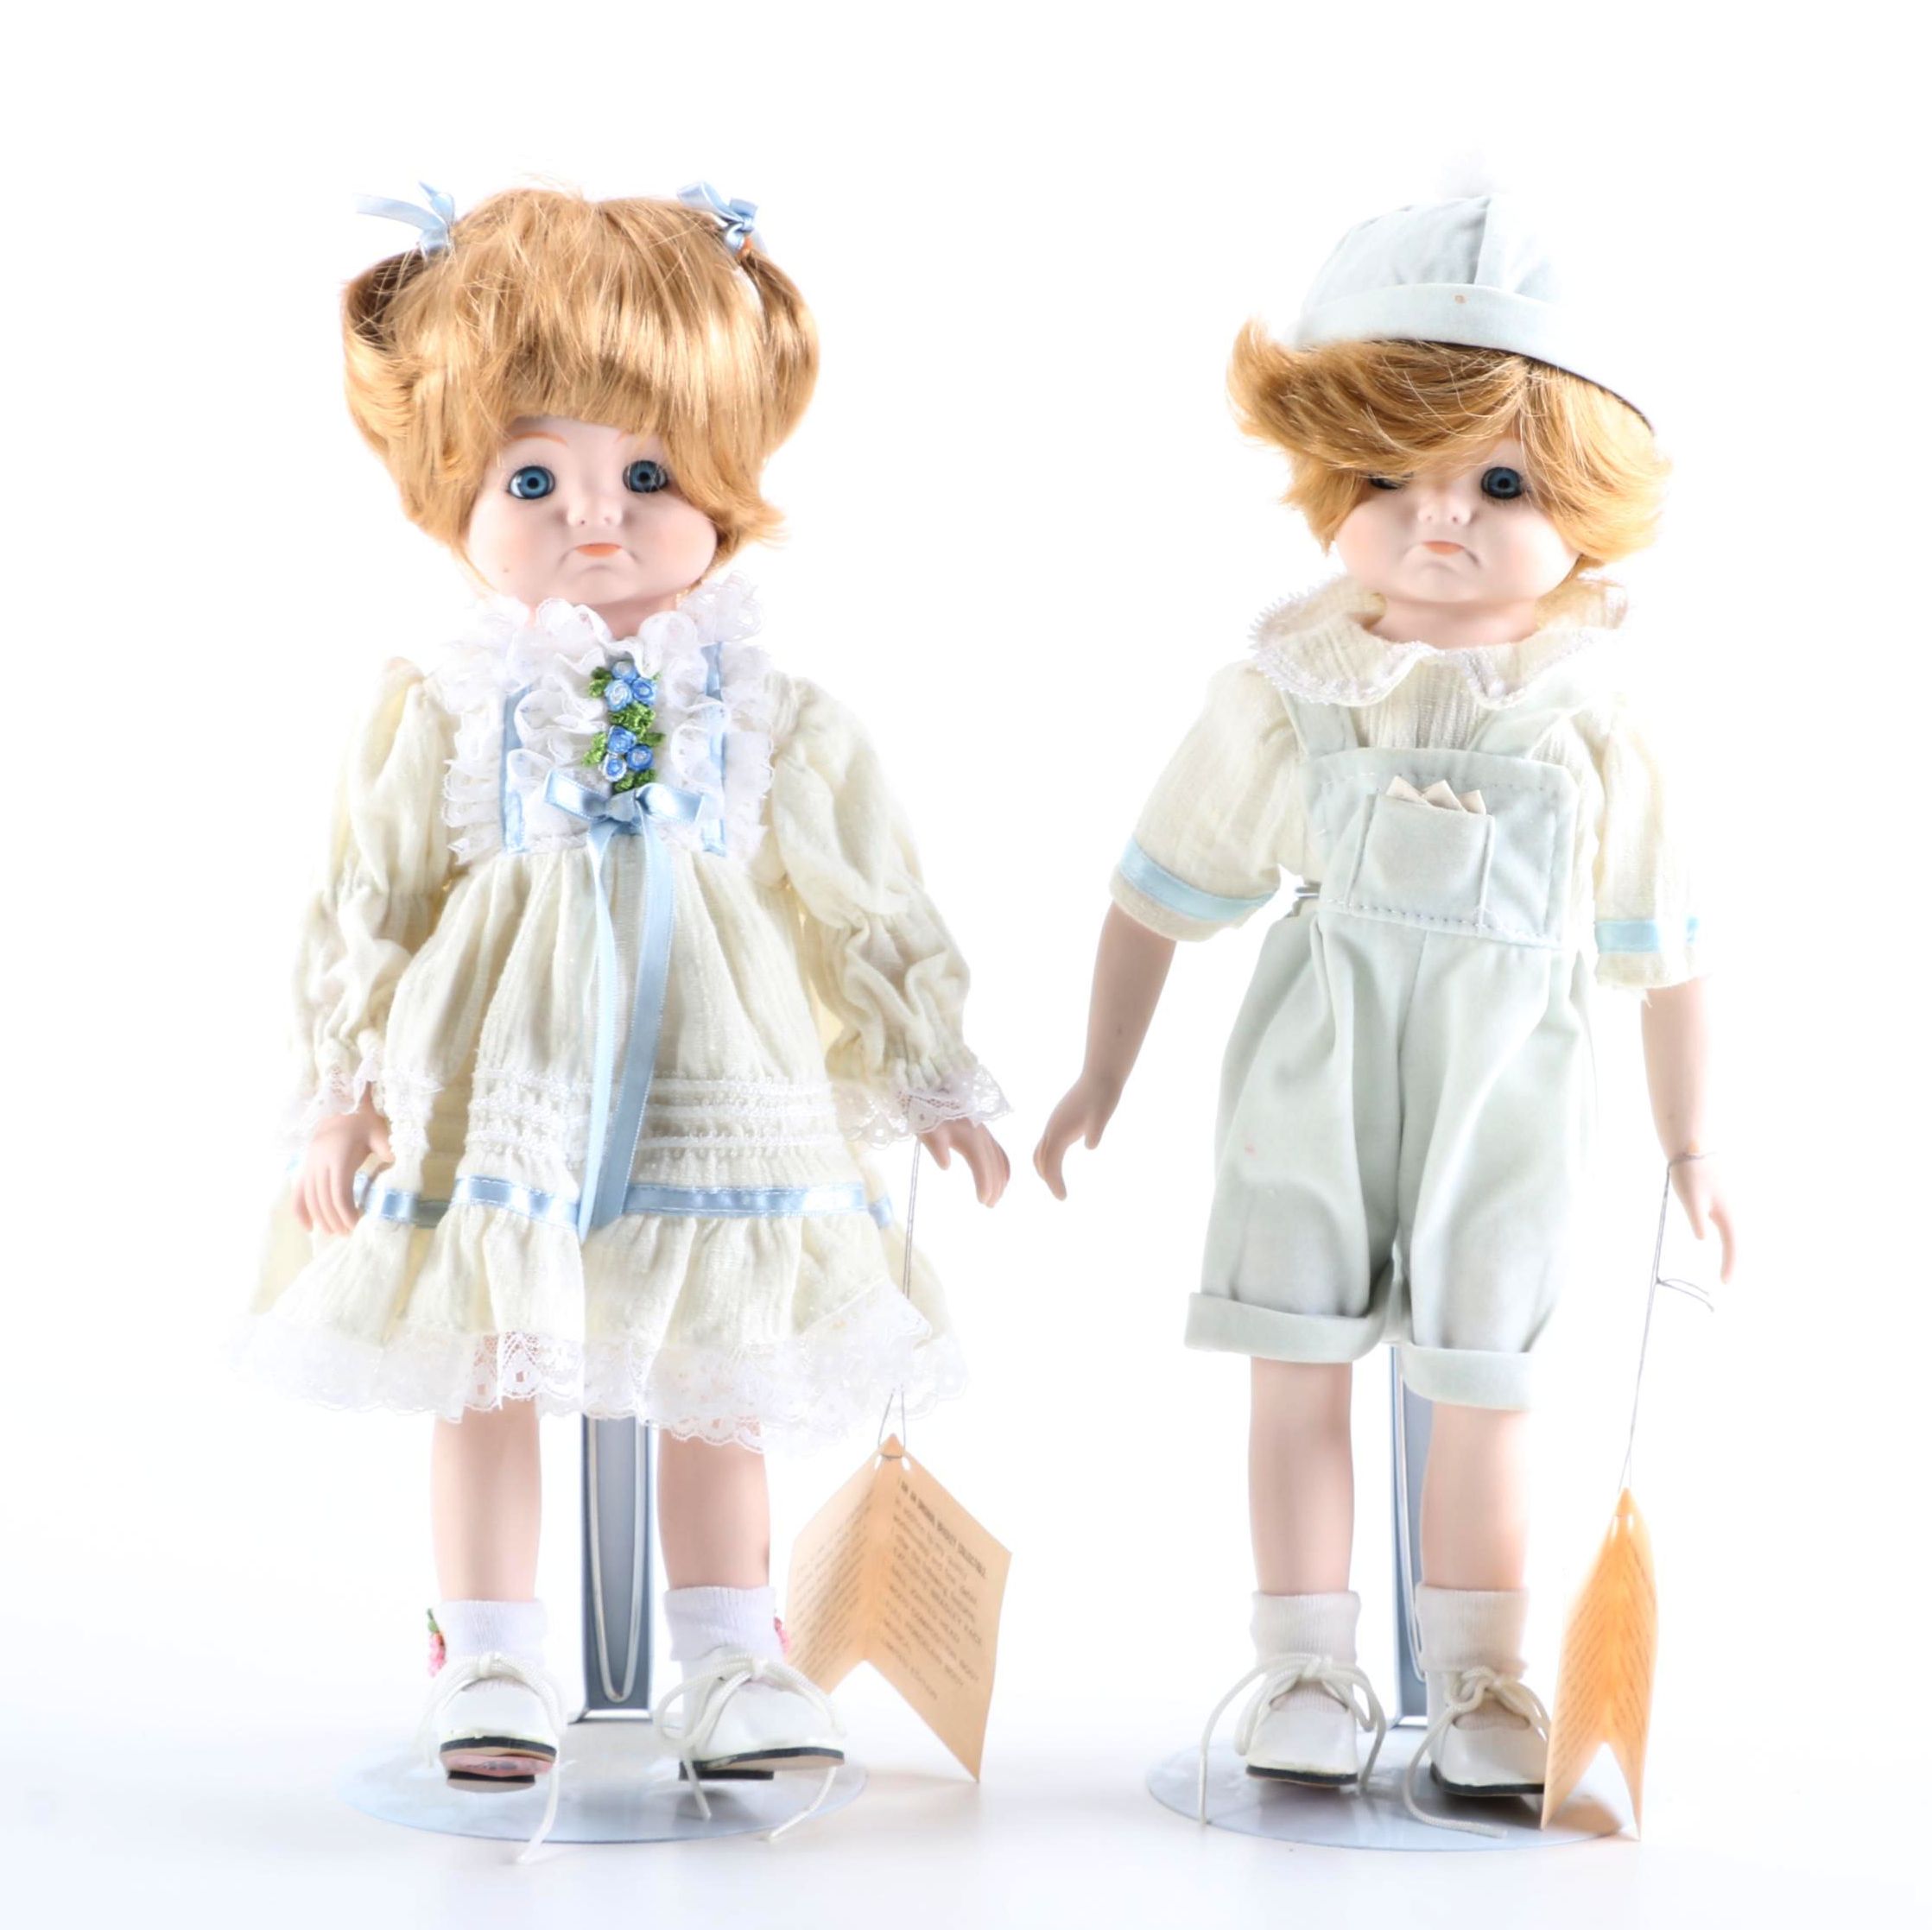 bradley's collectible dolls